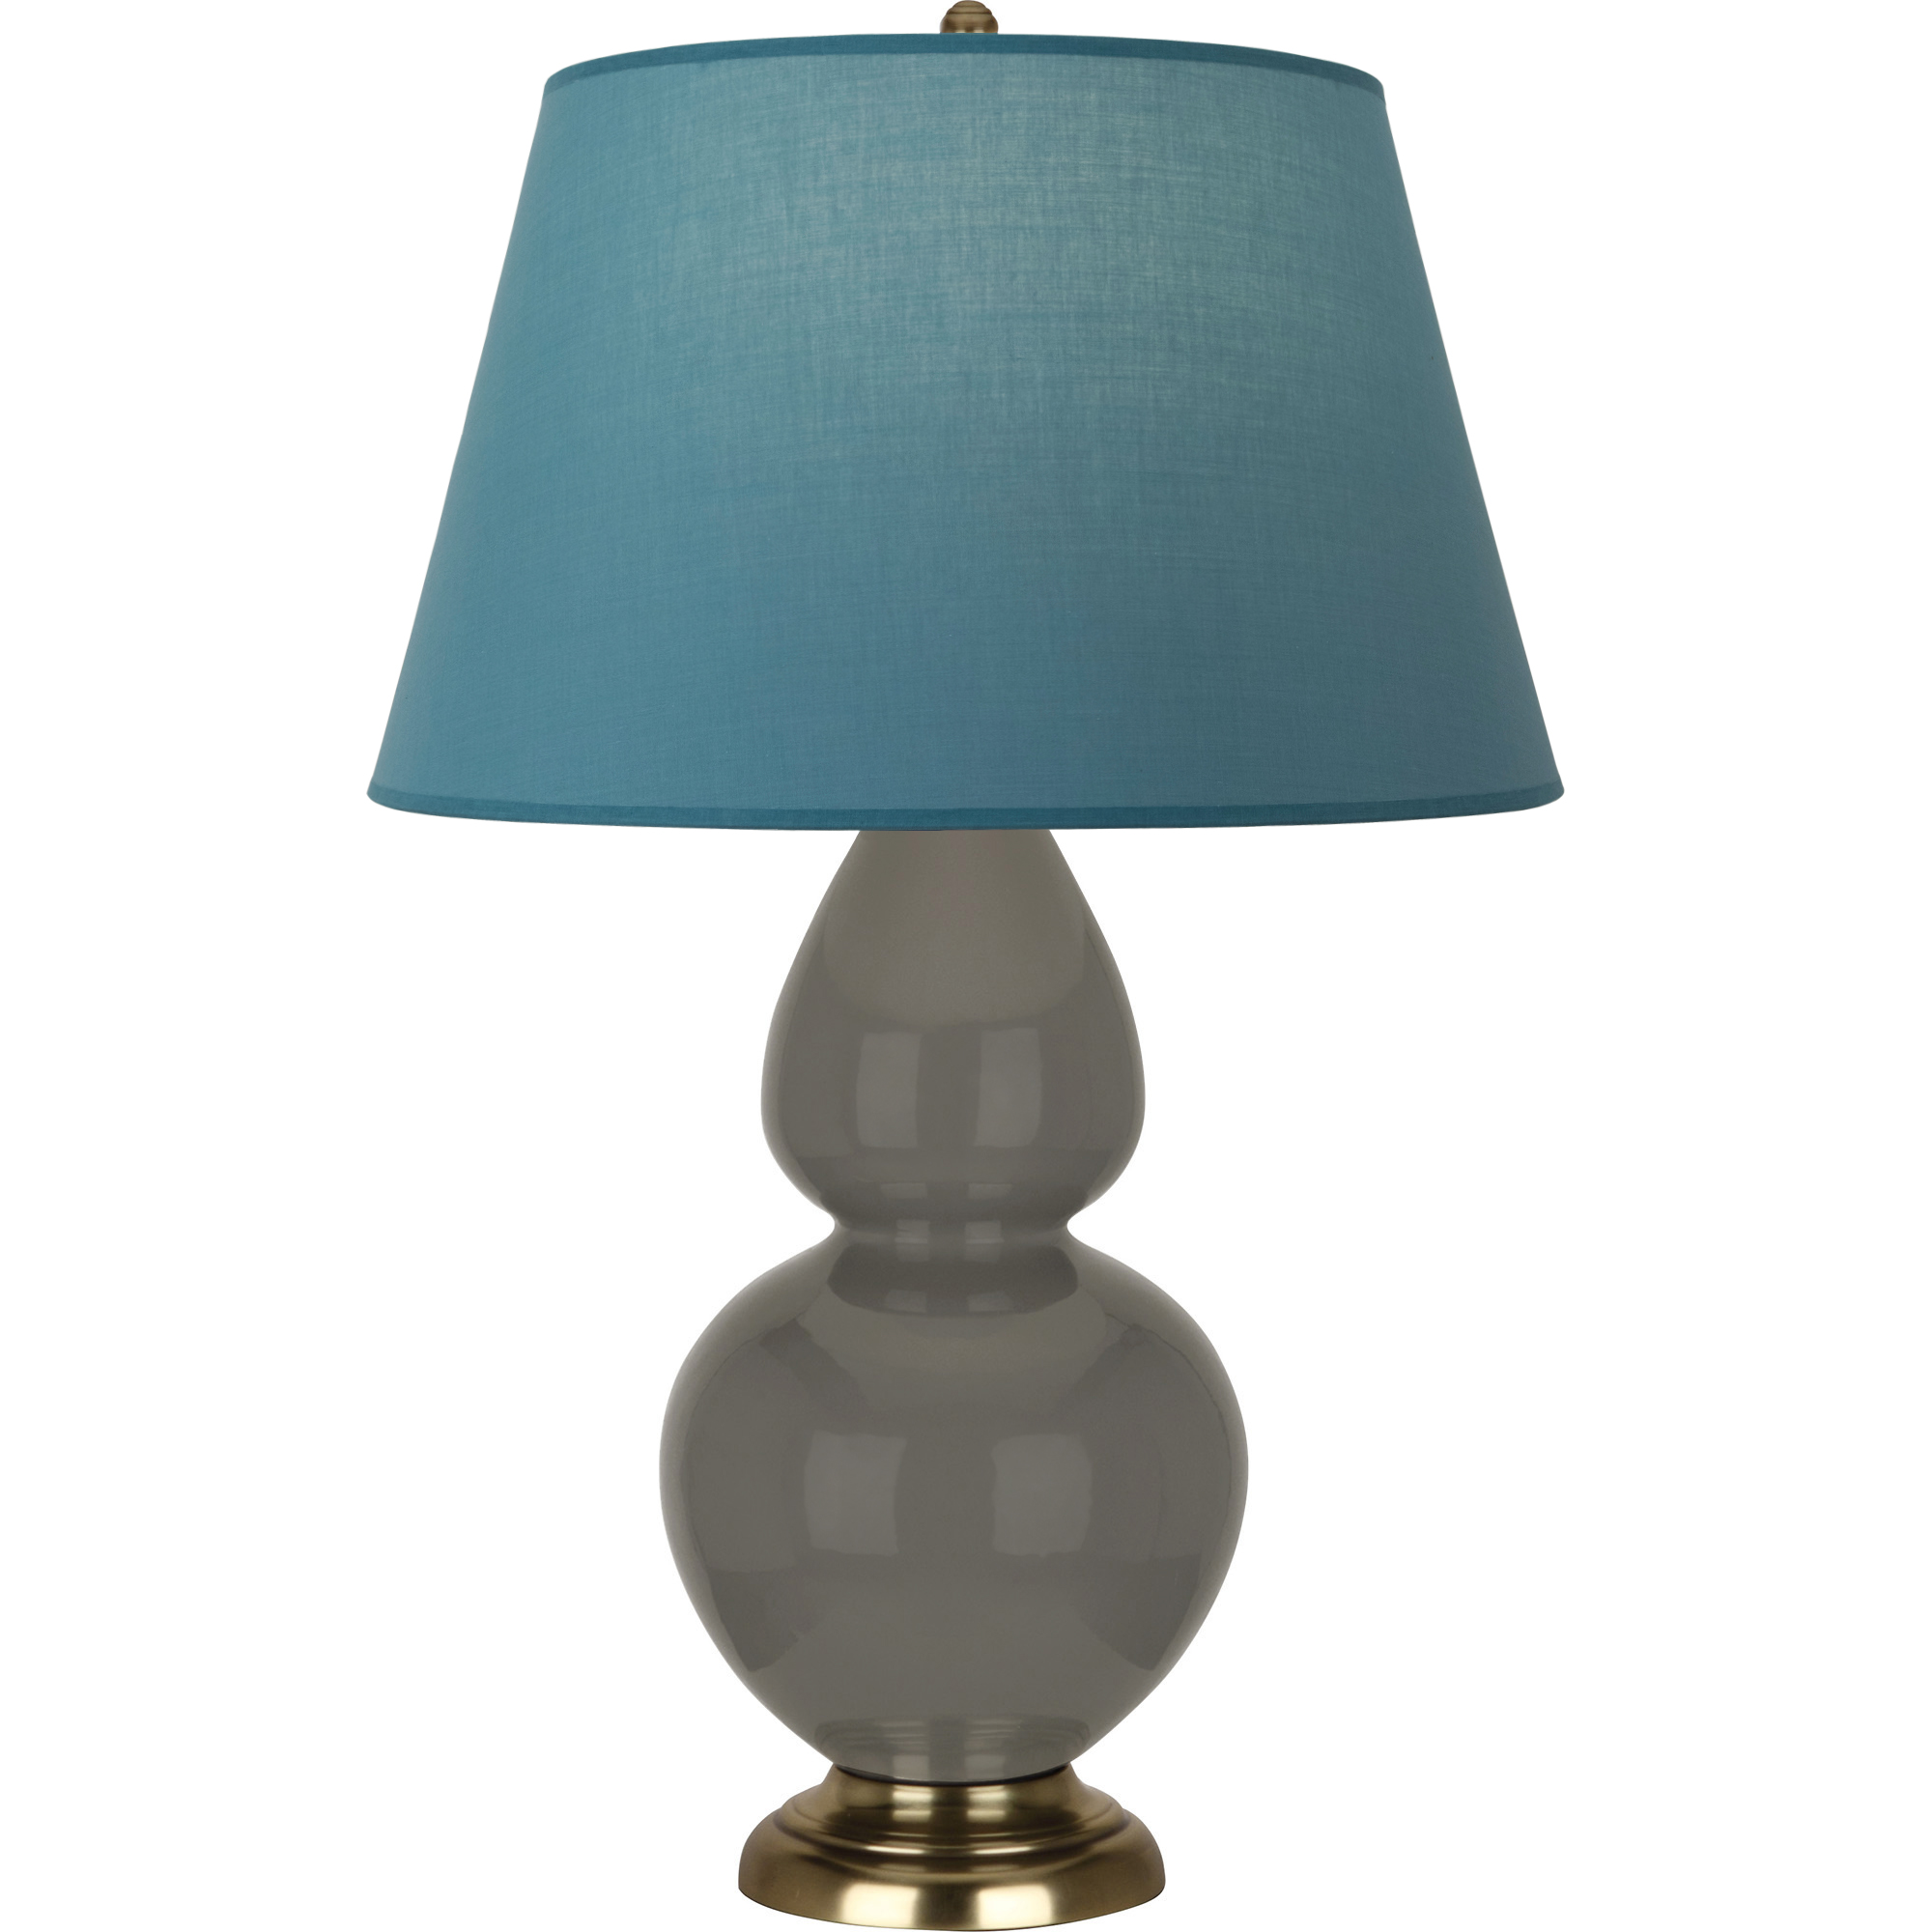 Double Gourd Table Lamp Style #CR20B